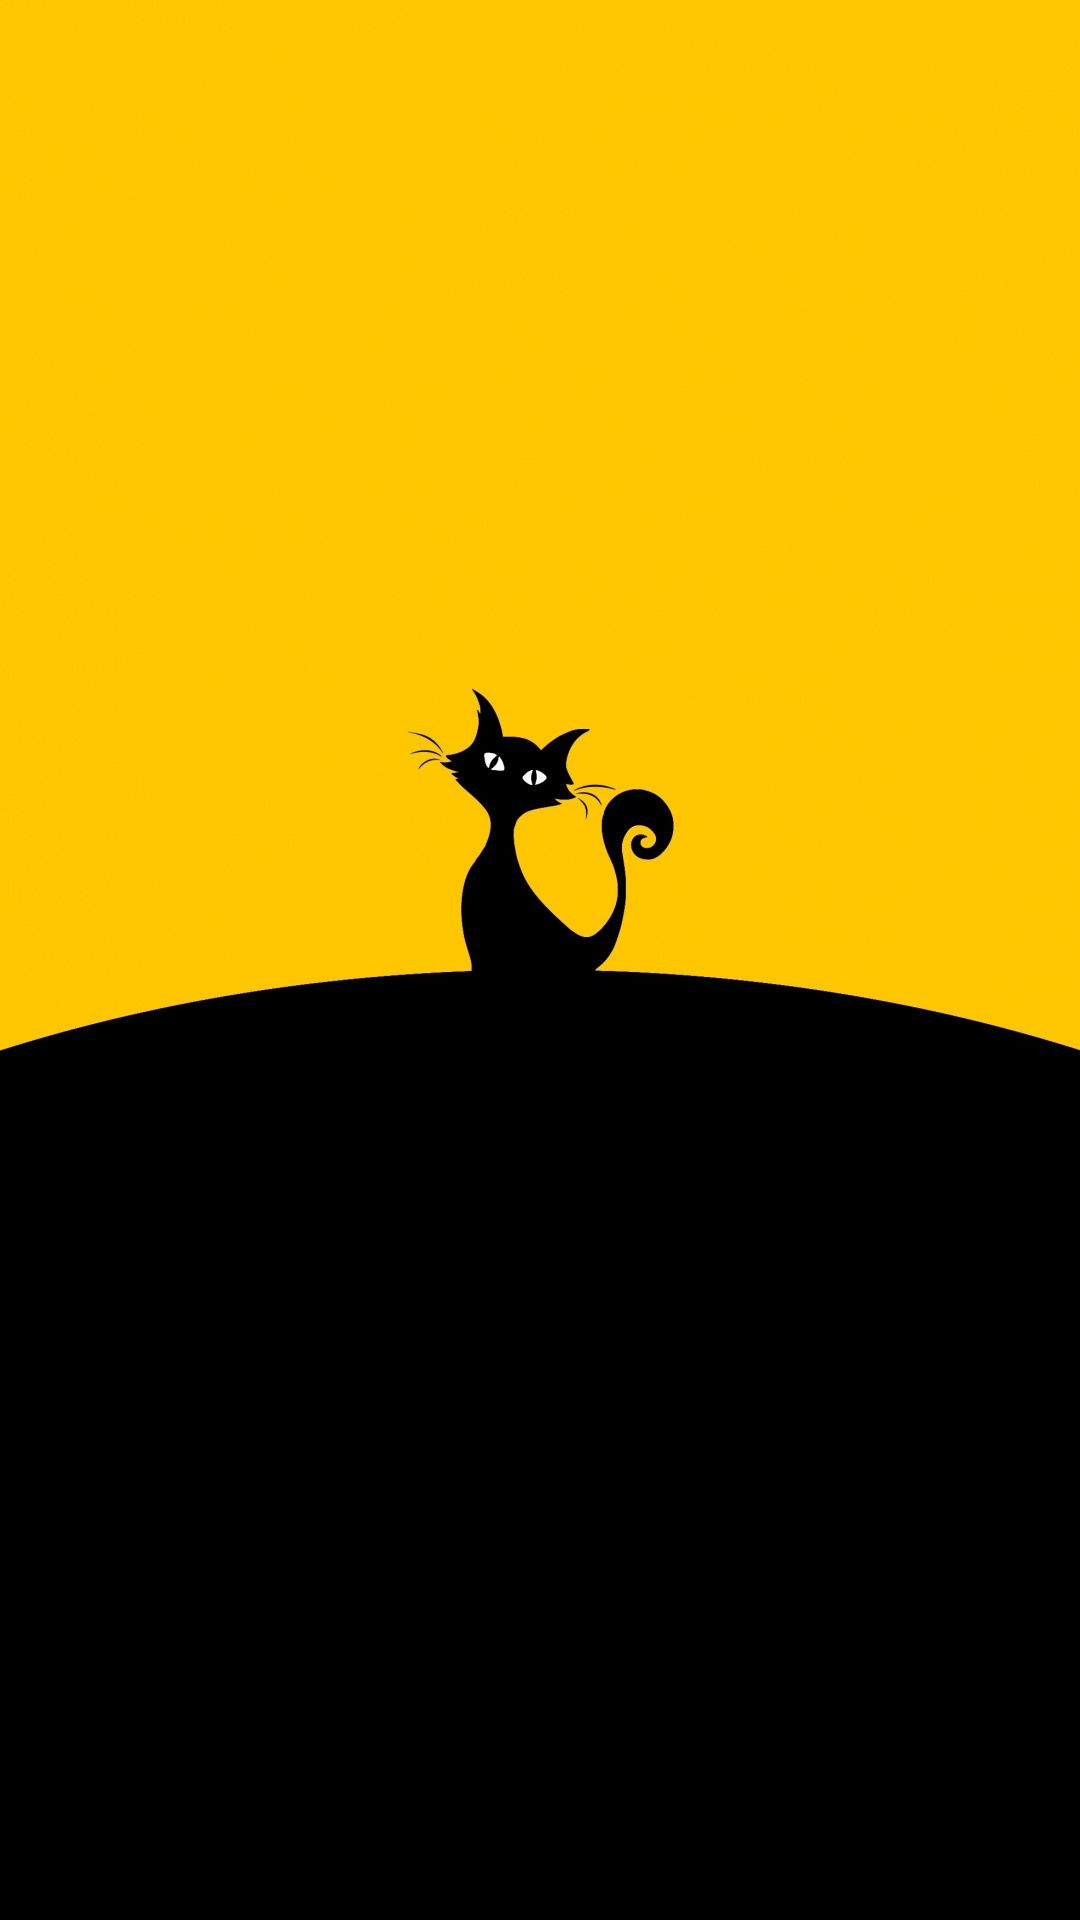 Minimal, cat, silhouette, 1080x1920 wallpaper. Cat wallpaper